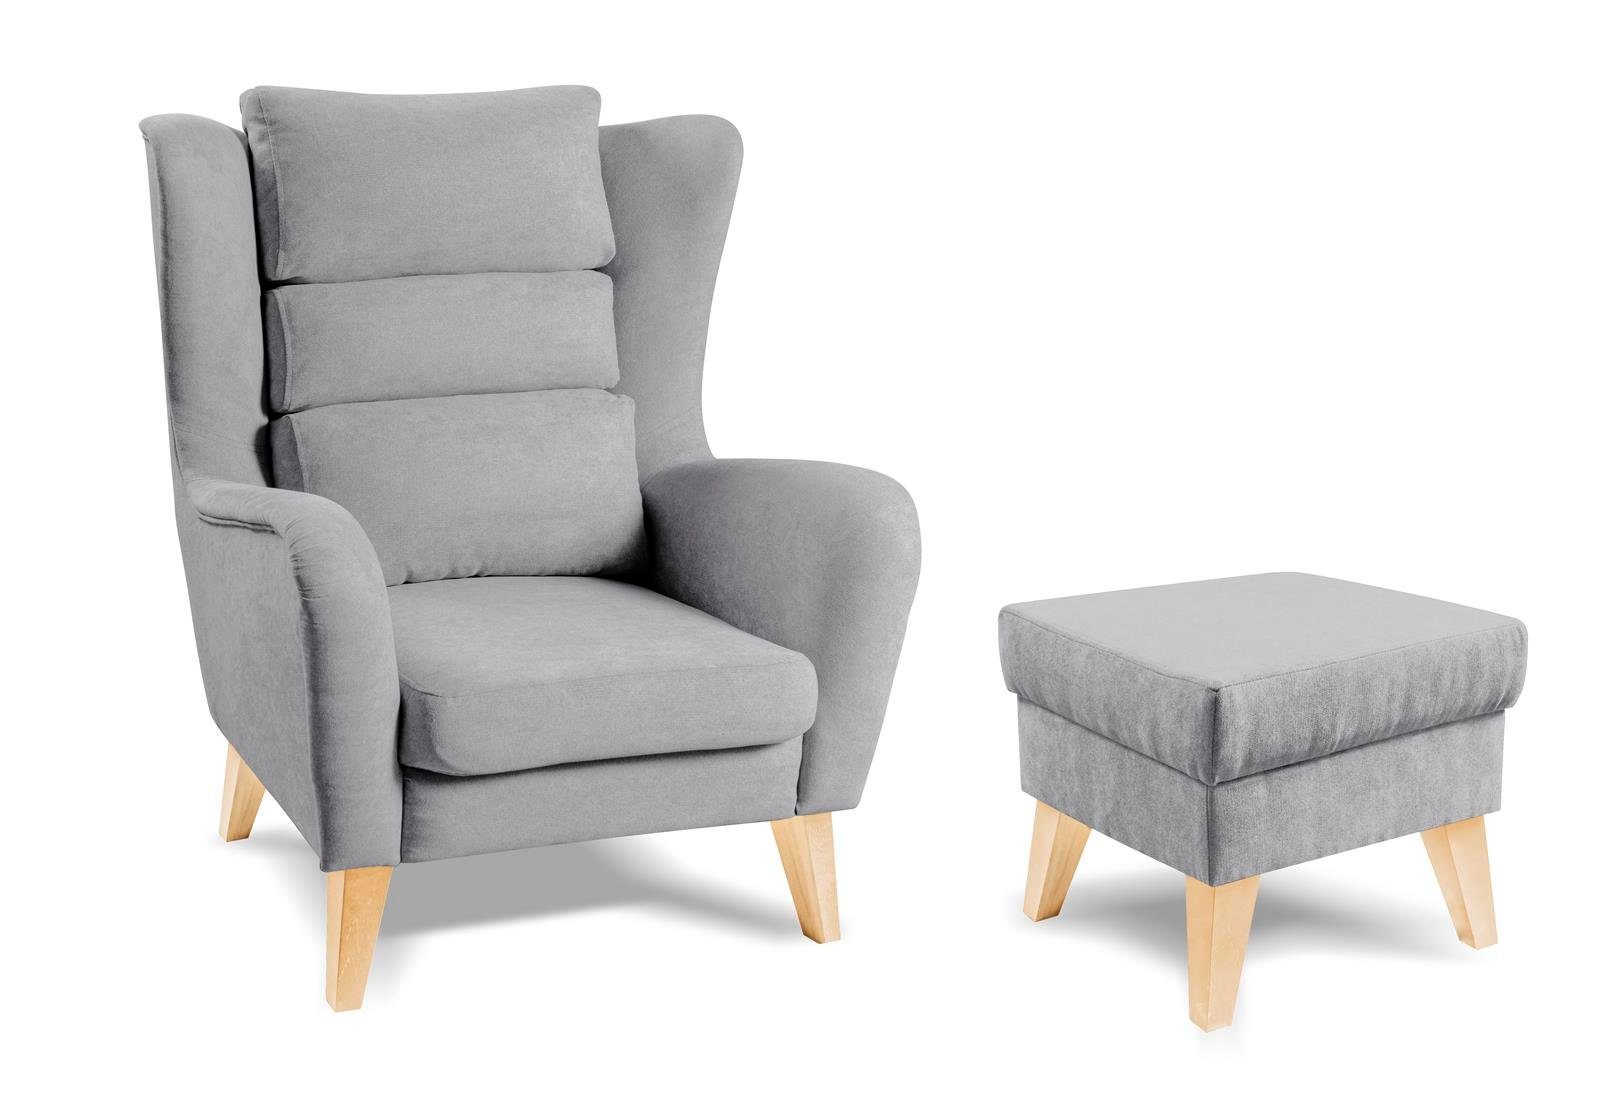 Beautysofa Relaxsessel Atlas (Relaxsessel mit Fußteil, aus Holzbeine), mit Fußstütze, Sessel mit Hocker aus Velvetstoff Hellgrau (mono 244) | Sessel